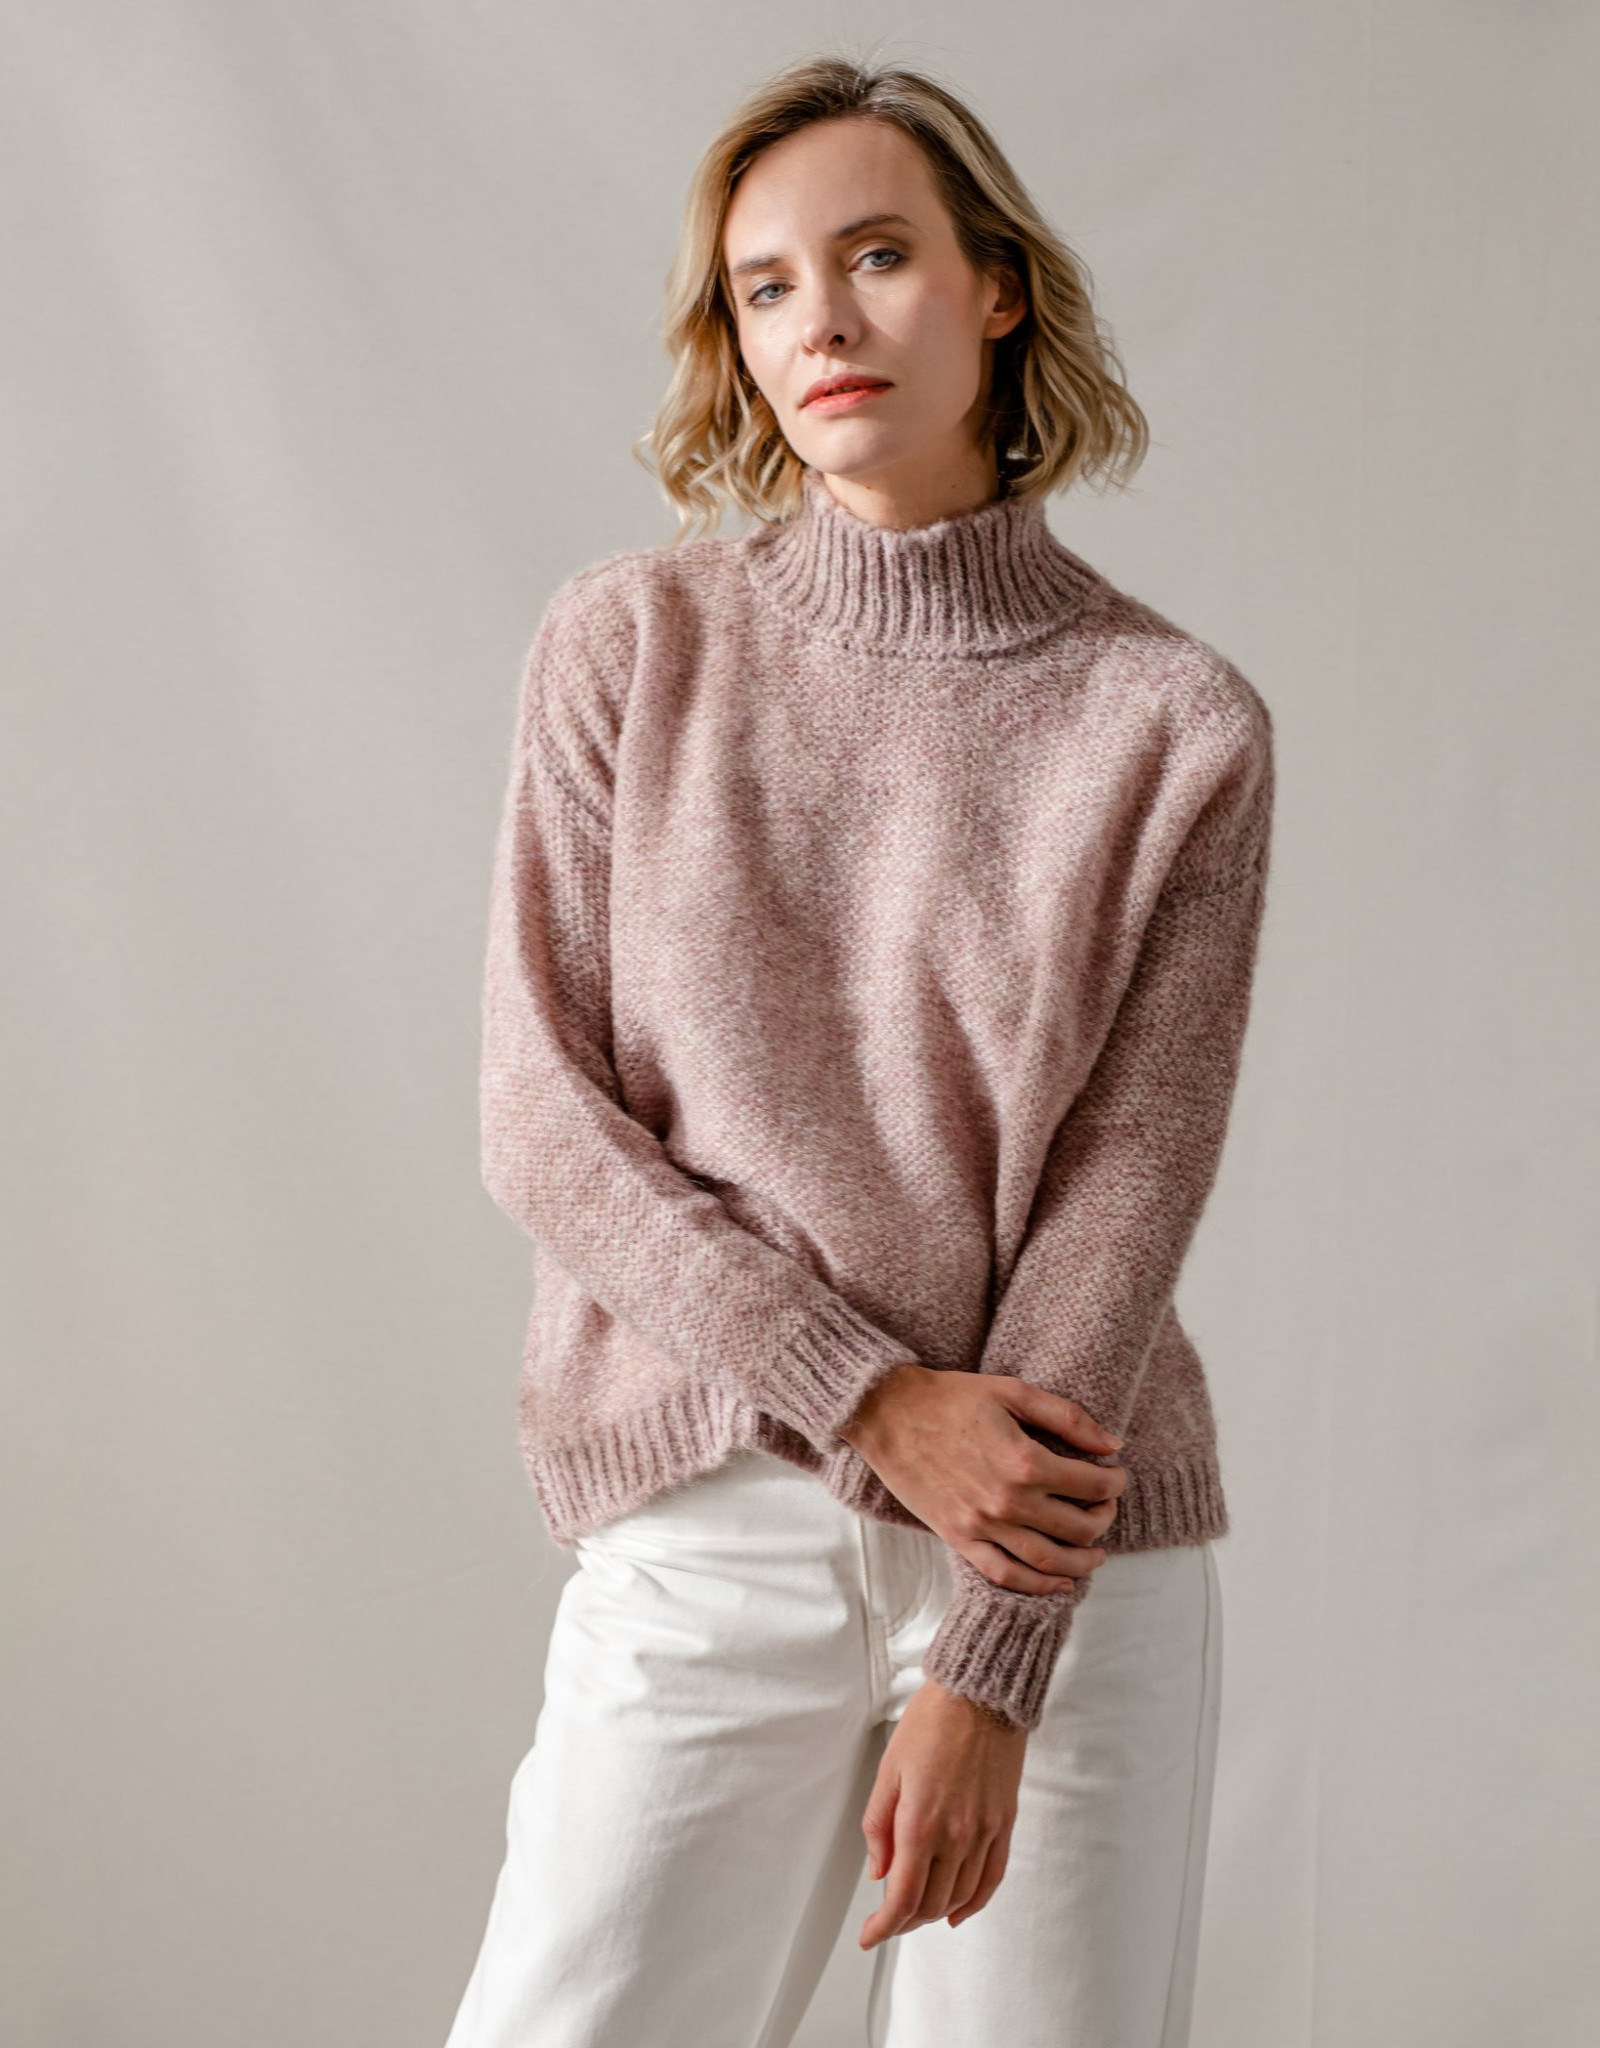 Michele & Hoven Paulina Loom Alpaca Sweater